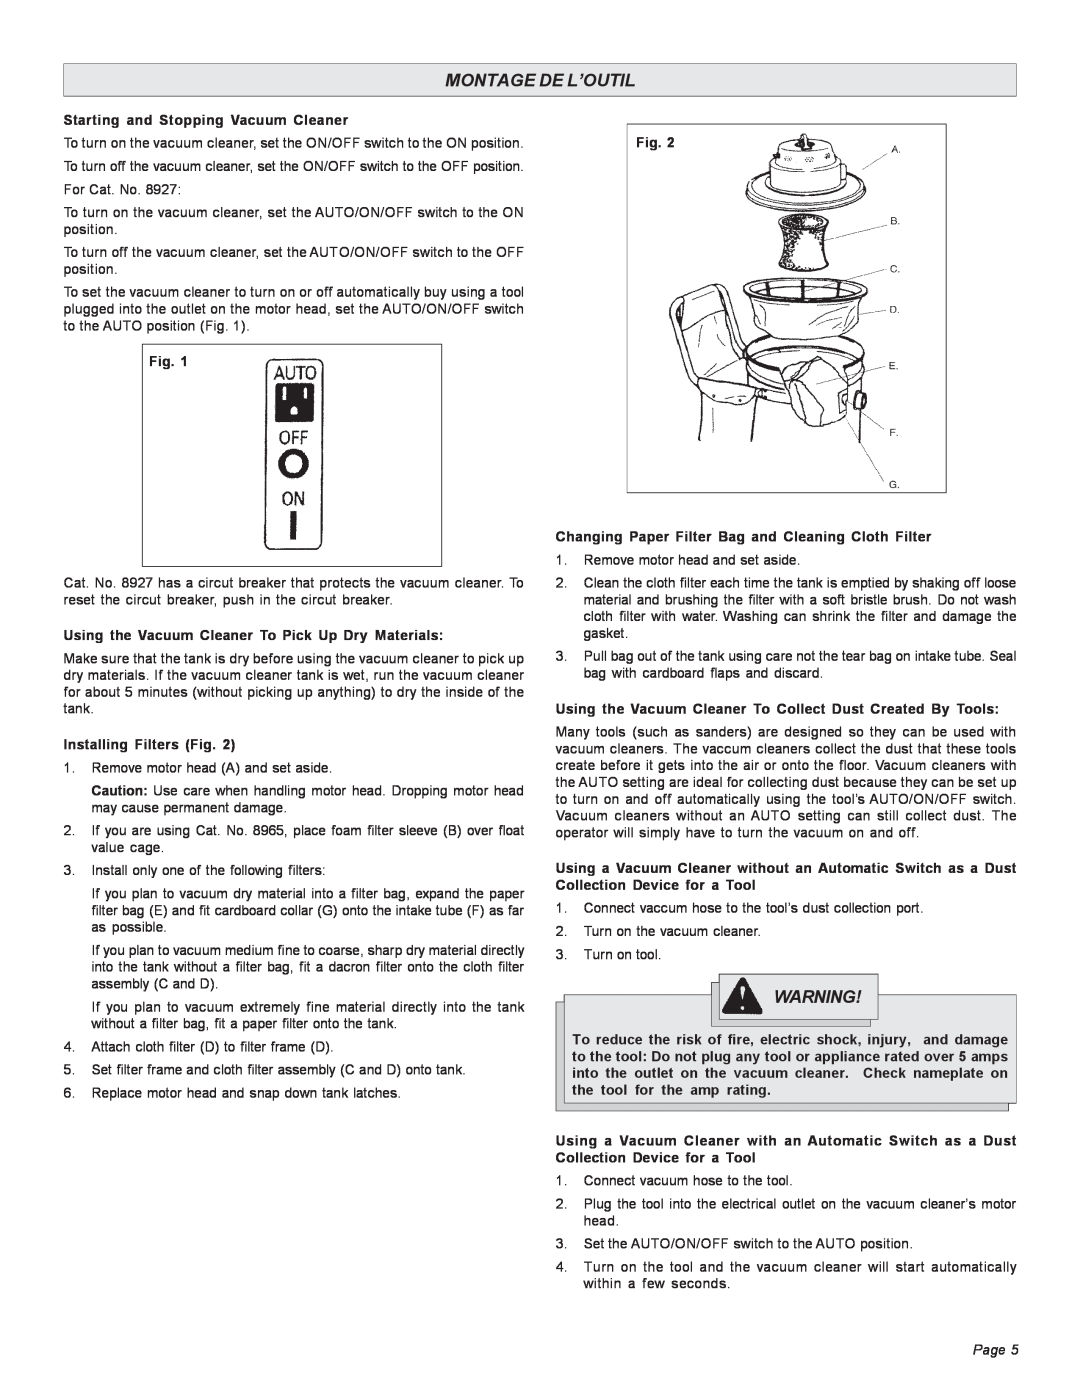 Milwaukee Heavy-Duty Commercial Vacuum manual Montage De L’Outil, Page 